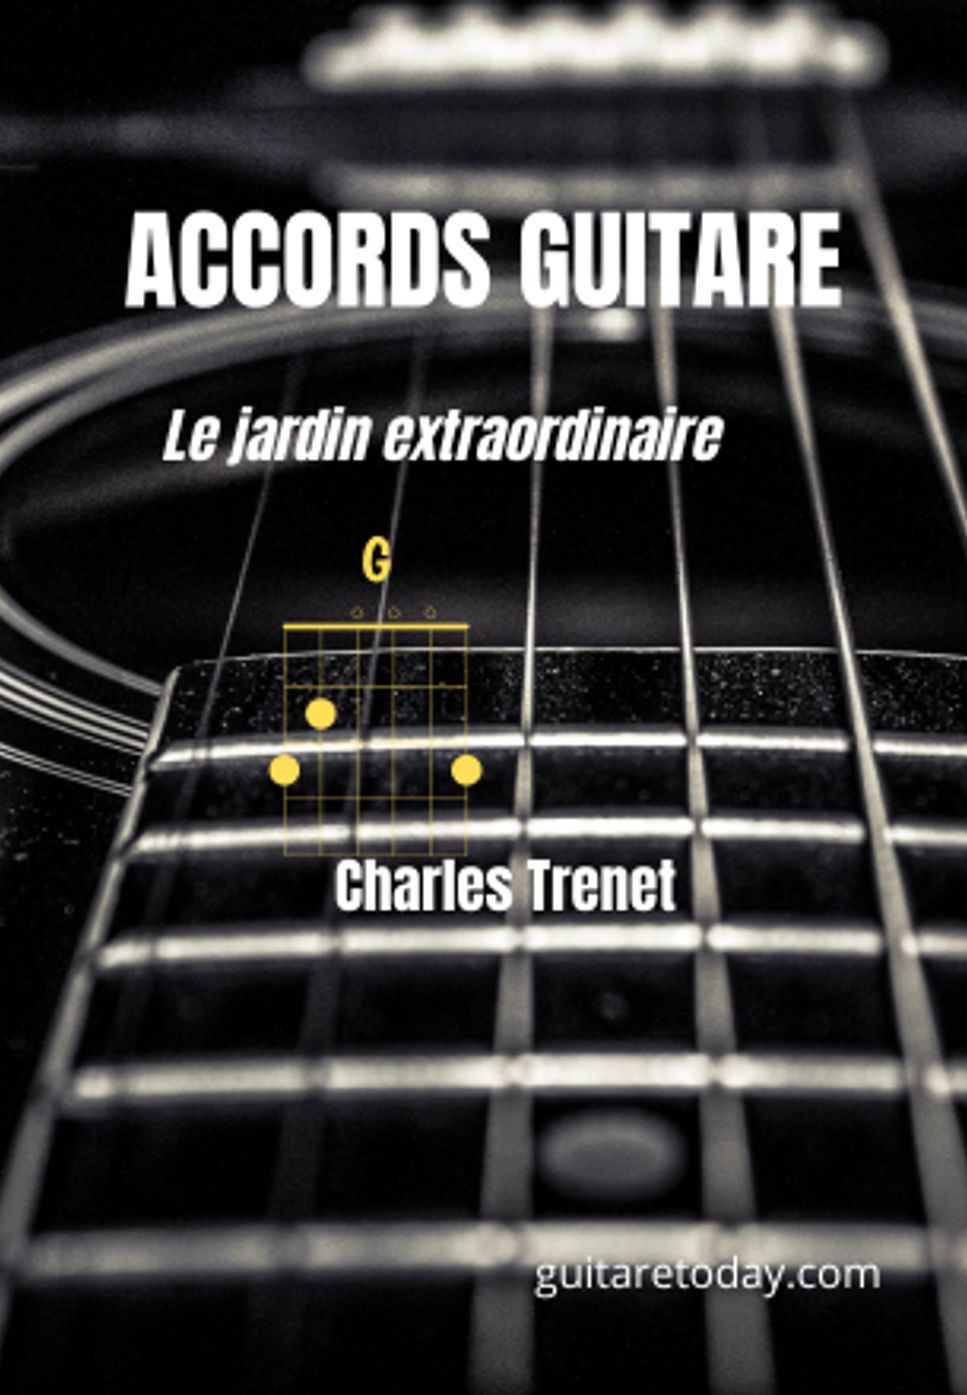 Charles Trenet - Le jardin extraordinaire by guitaretoday.com